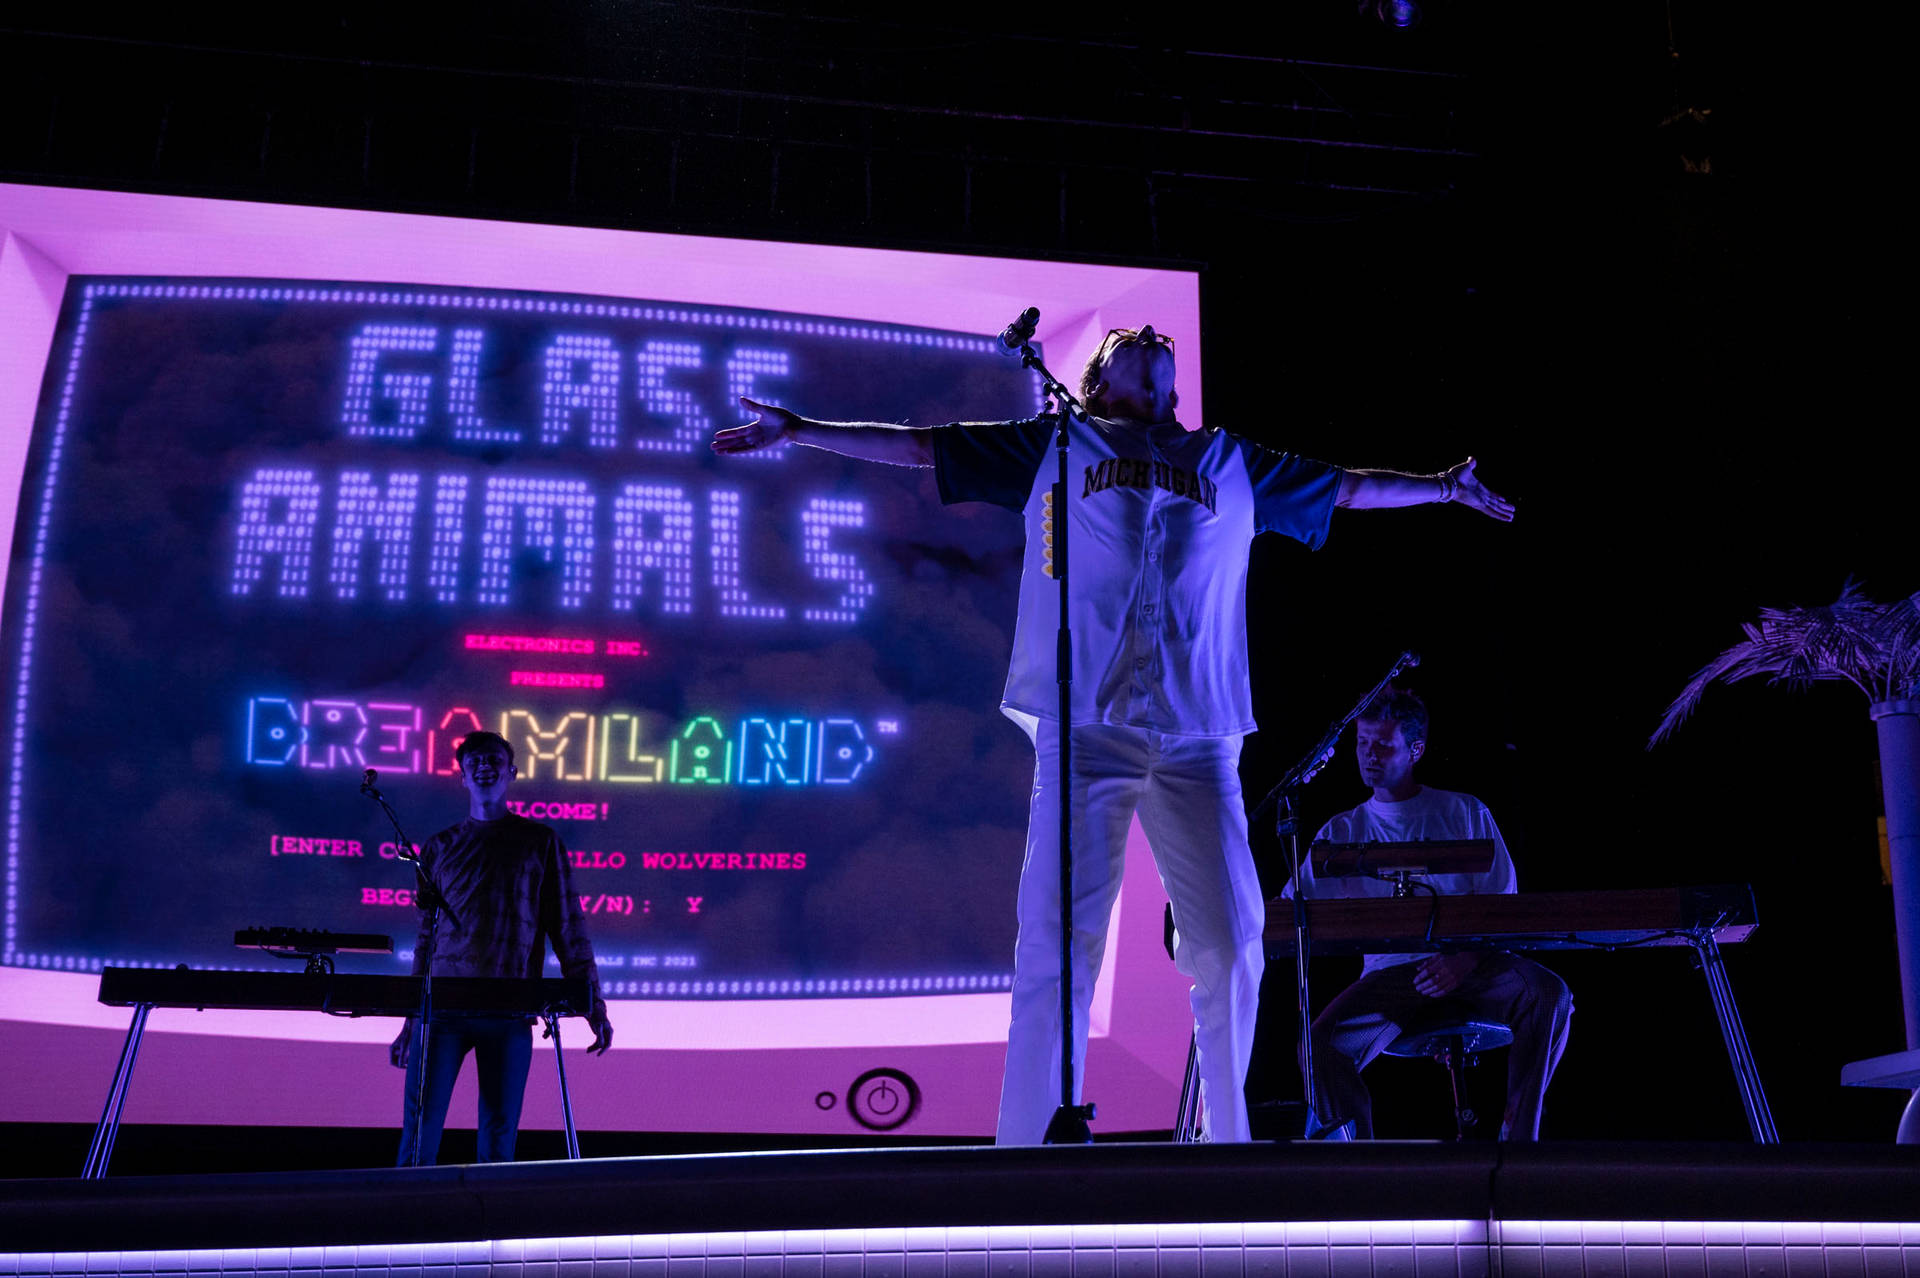 Glass Animals Dreamland